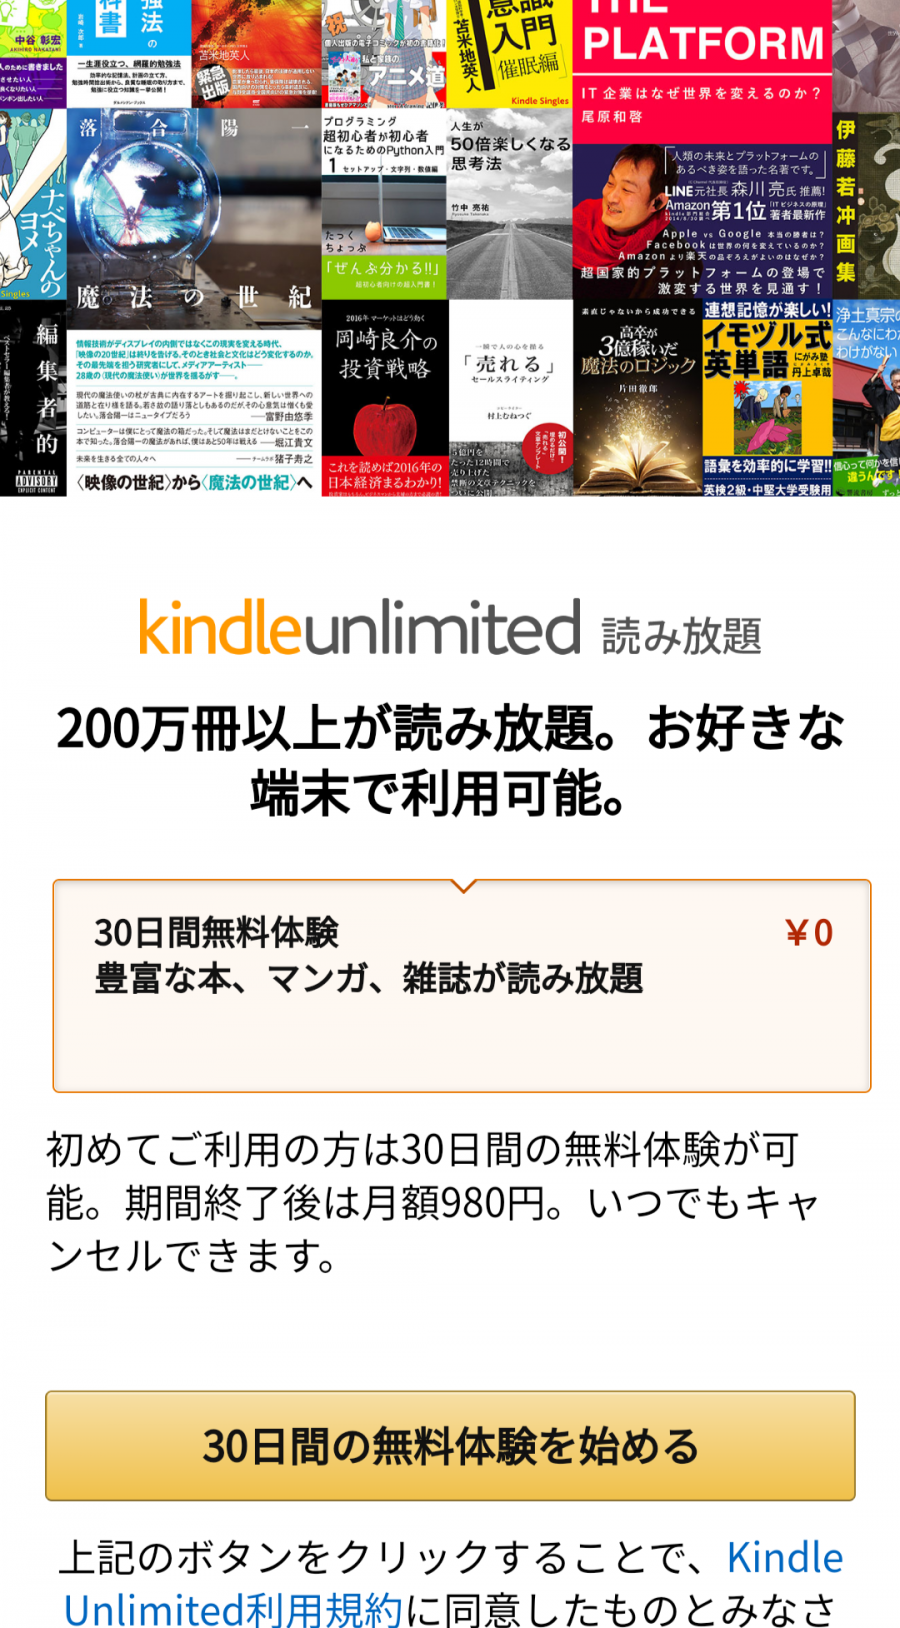 Kindle Unlimited 徹底解説 料金プラン 解約方法 おすすめ本も紹介 Appliv Topics